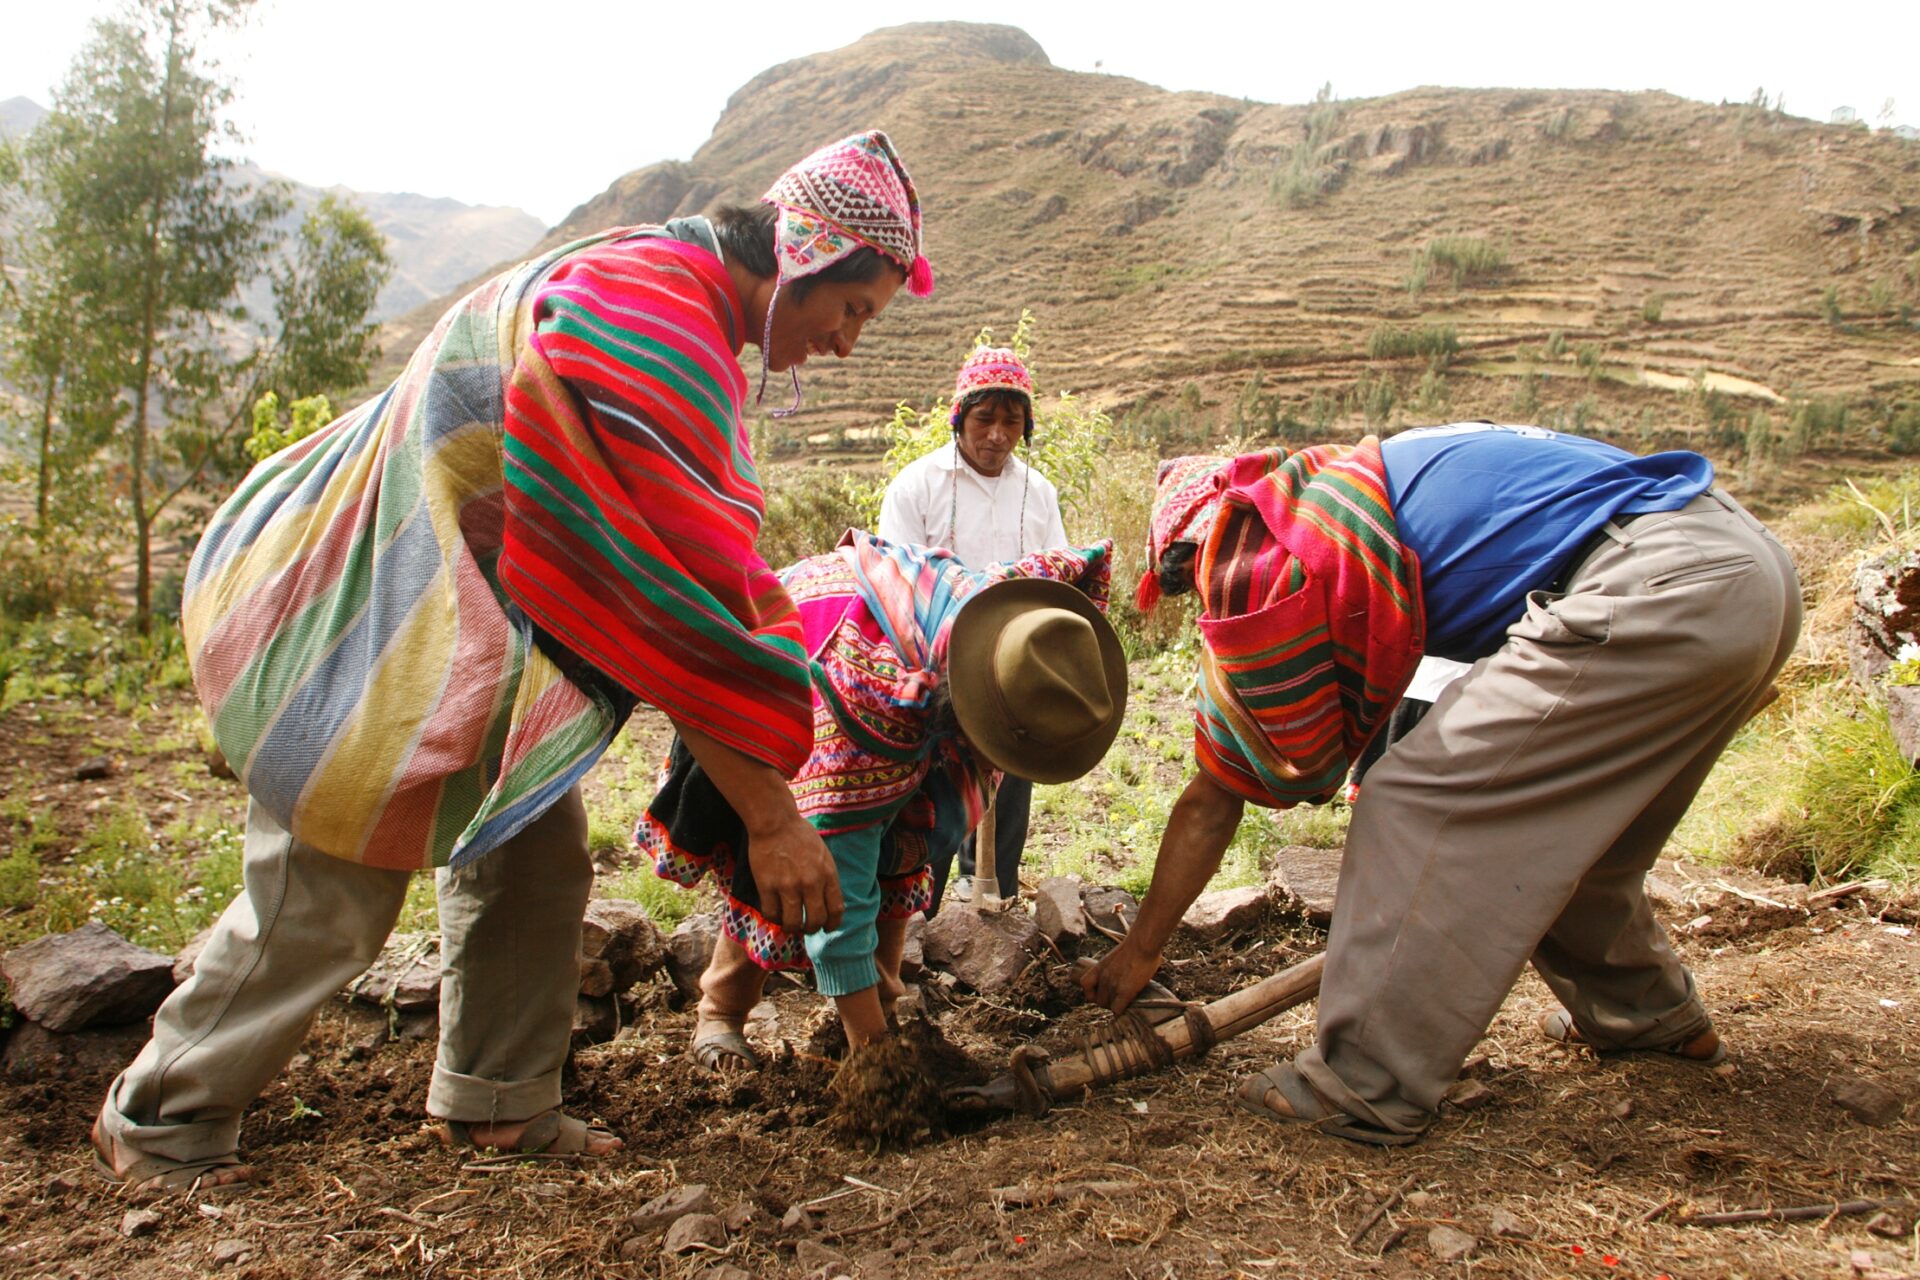 Smallholder farmers Peru ©Enrique Castro-Mendívil / PromPerú